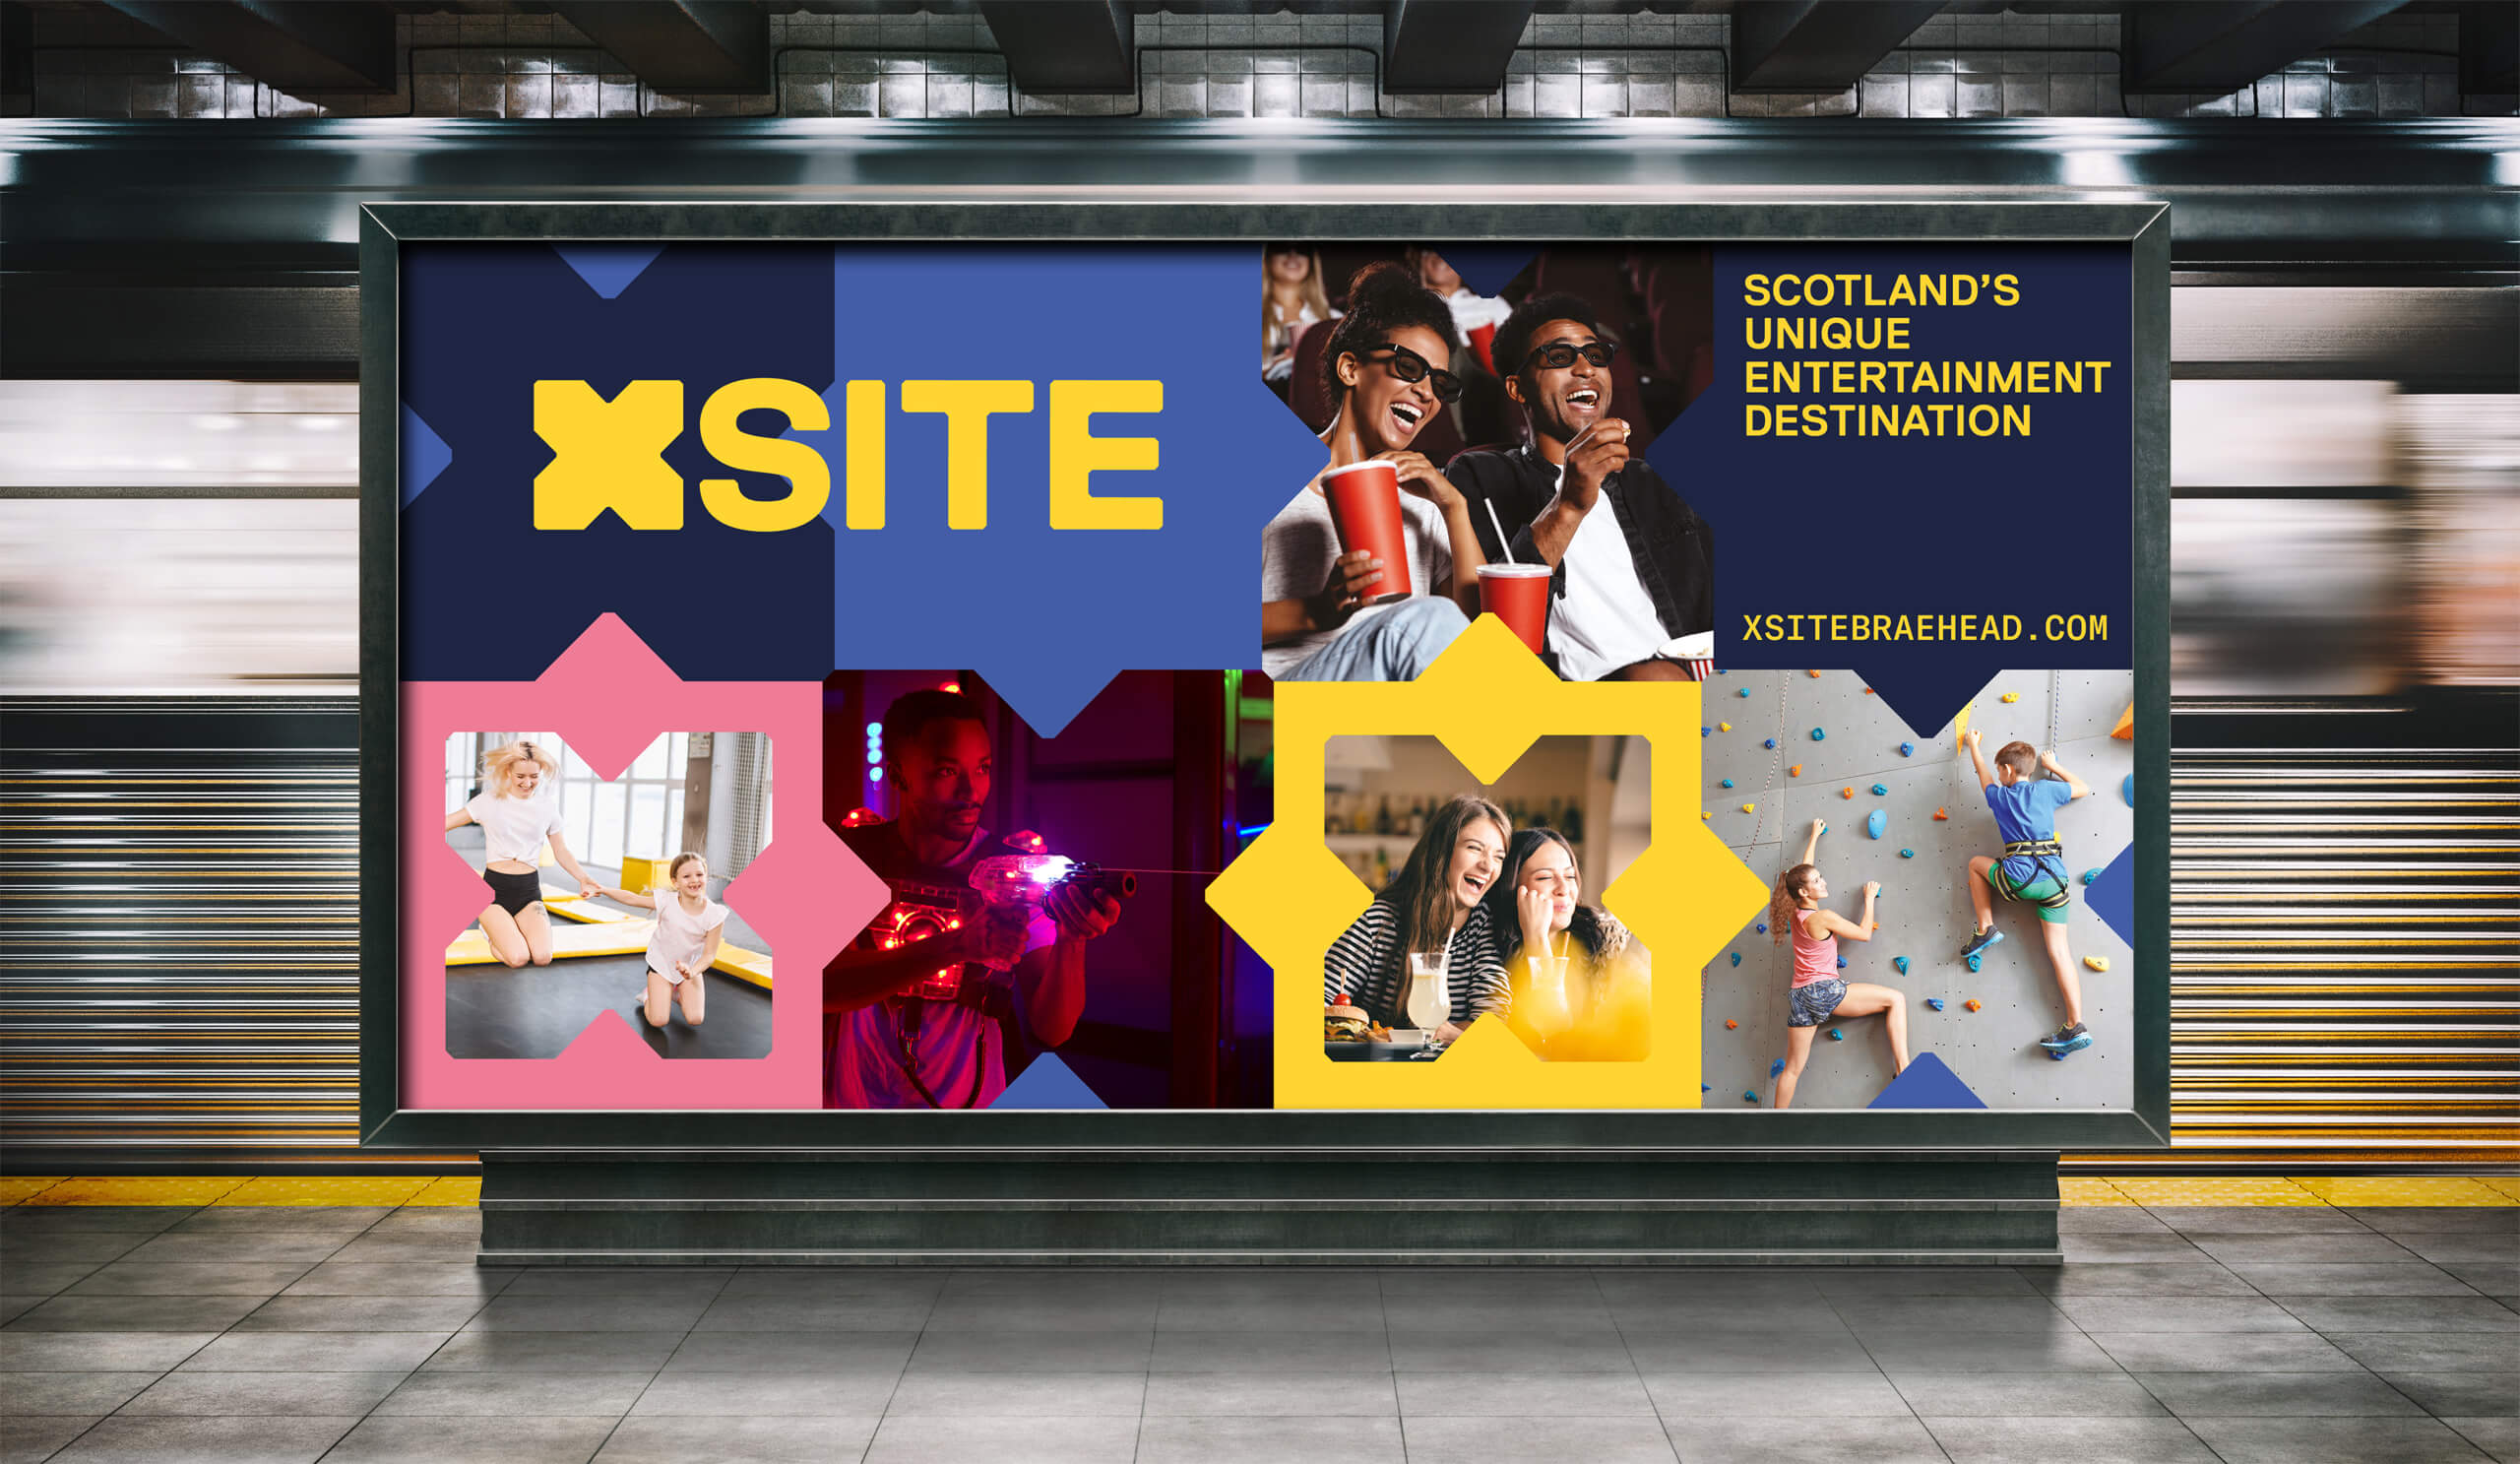 XSite billboard in a public space